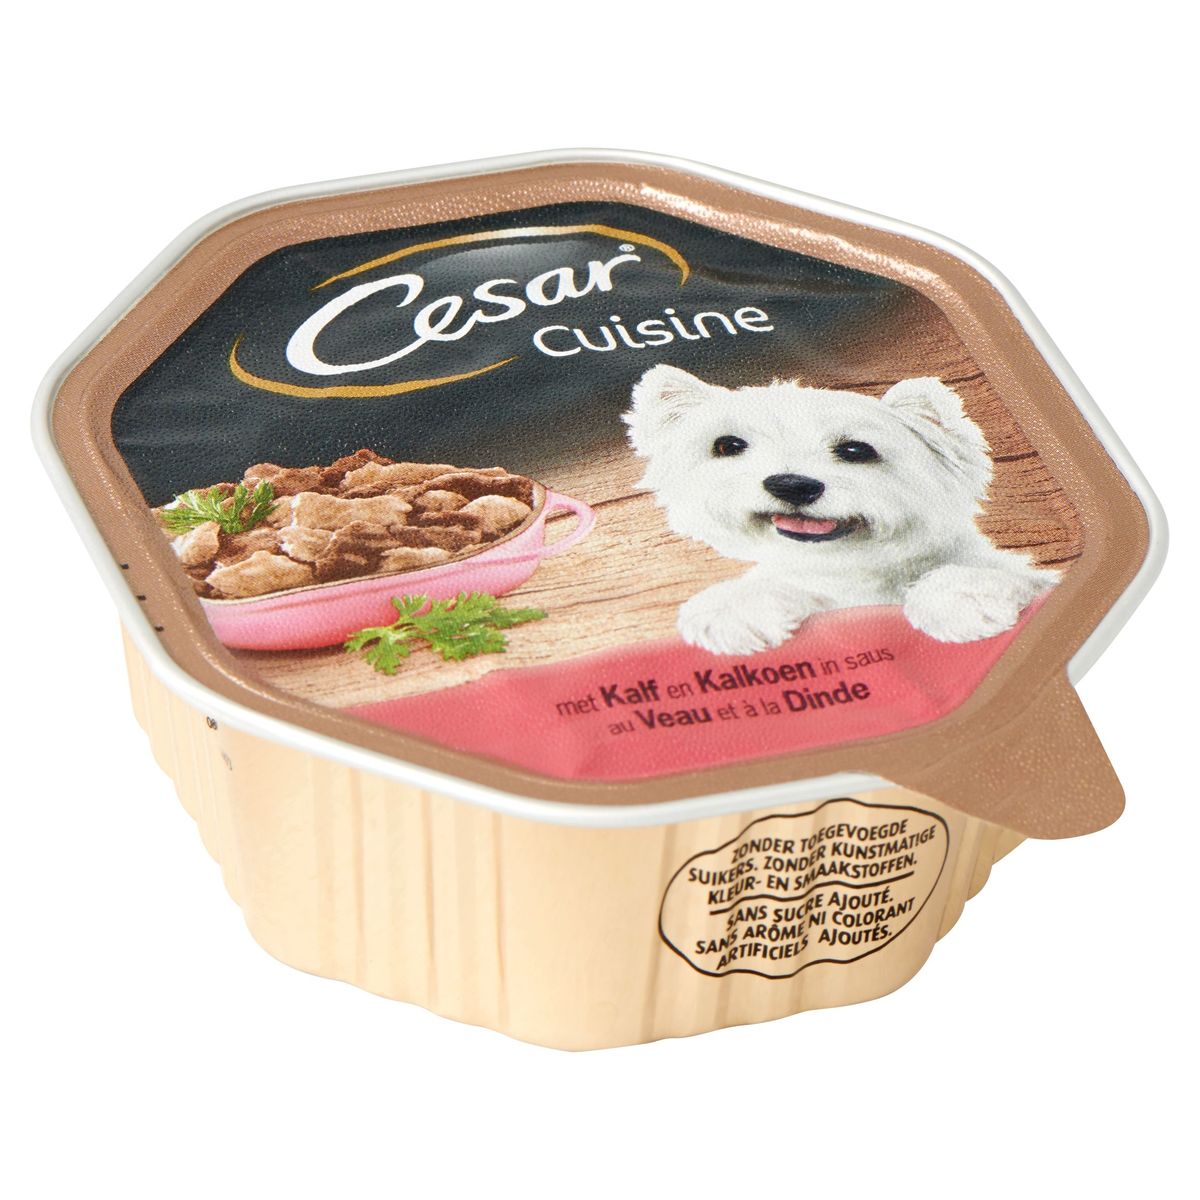 Cesar Cuisine Hondenvoeding Kuipje met Kalf en Kalkoen in Saus 150 g